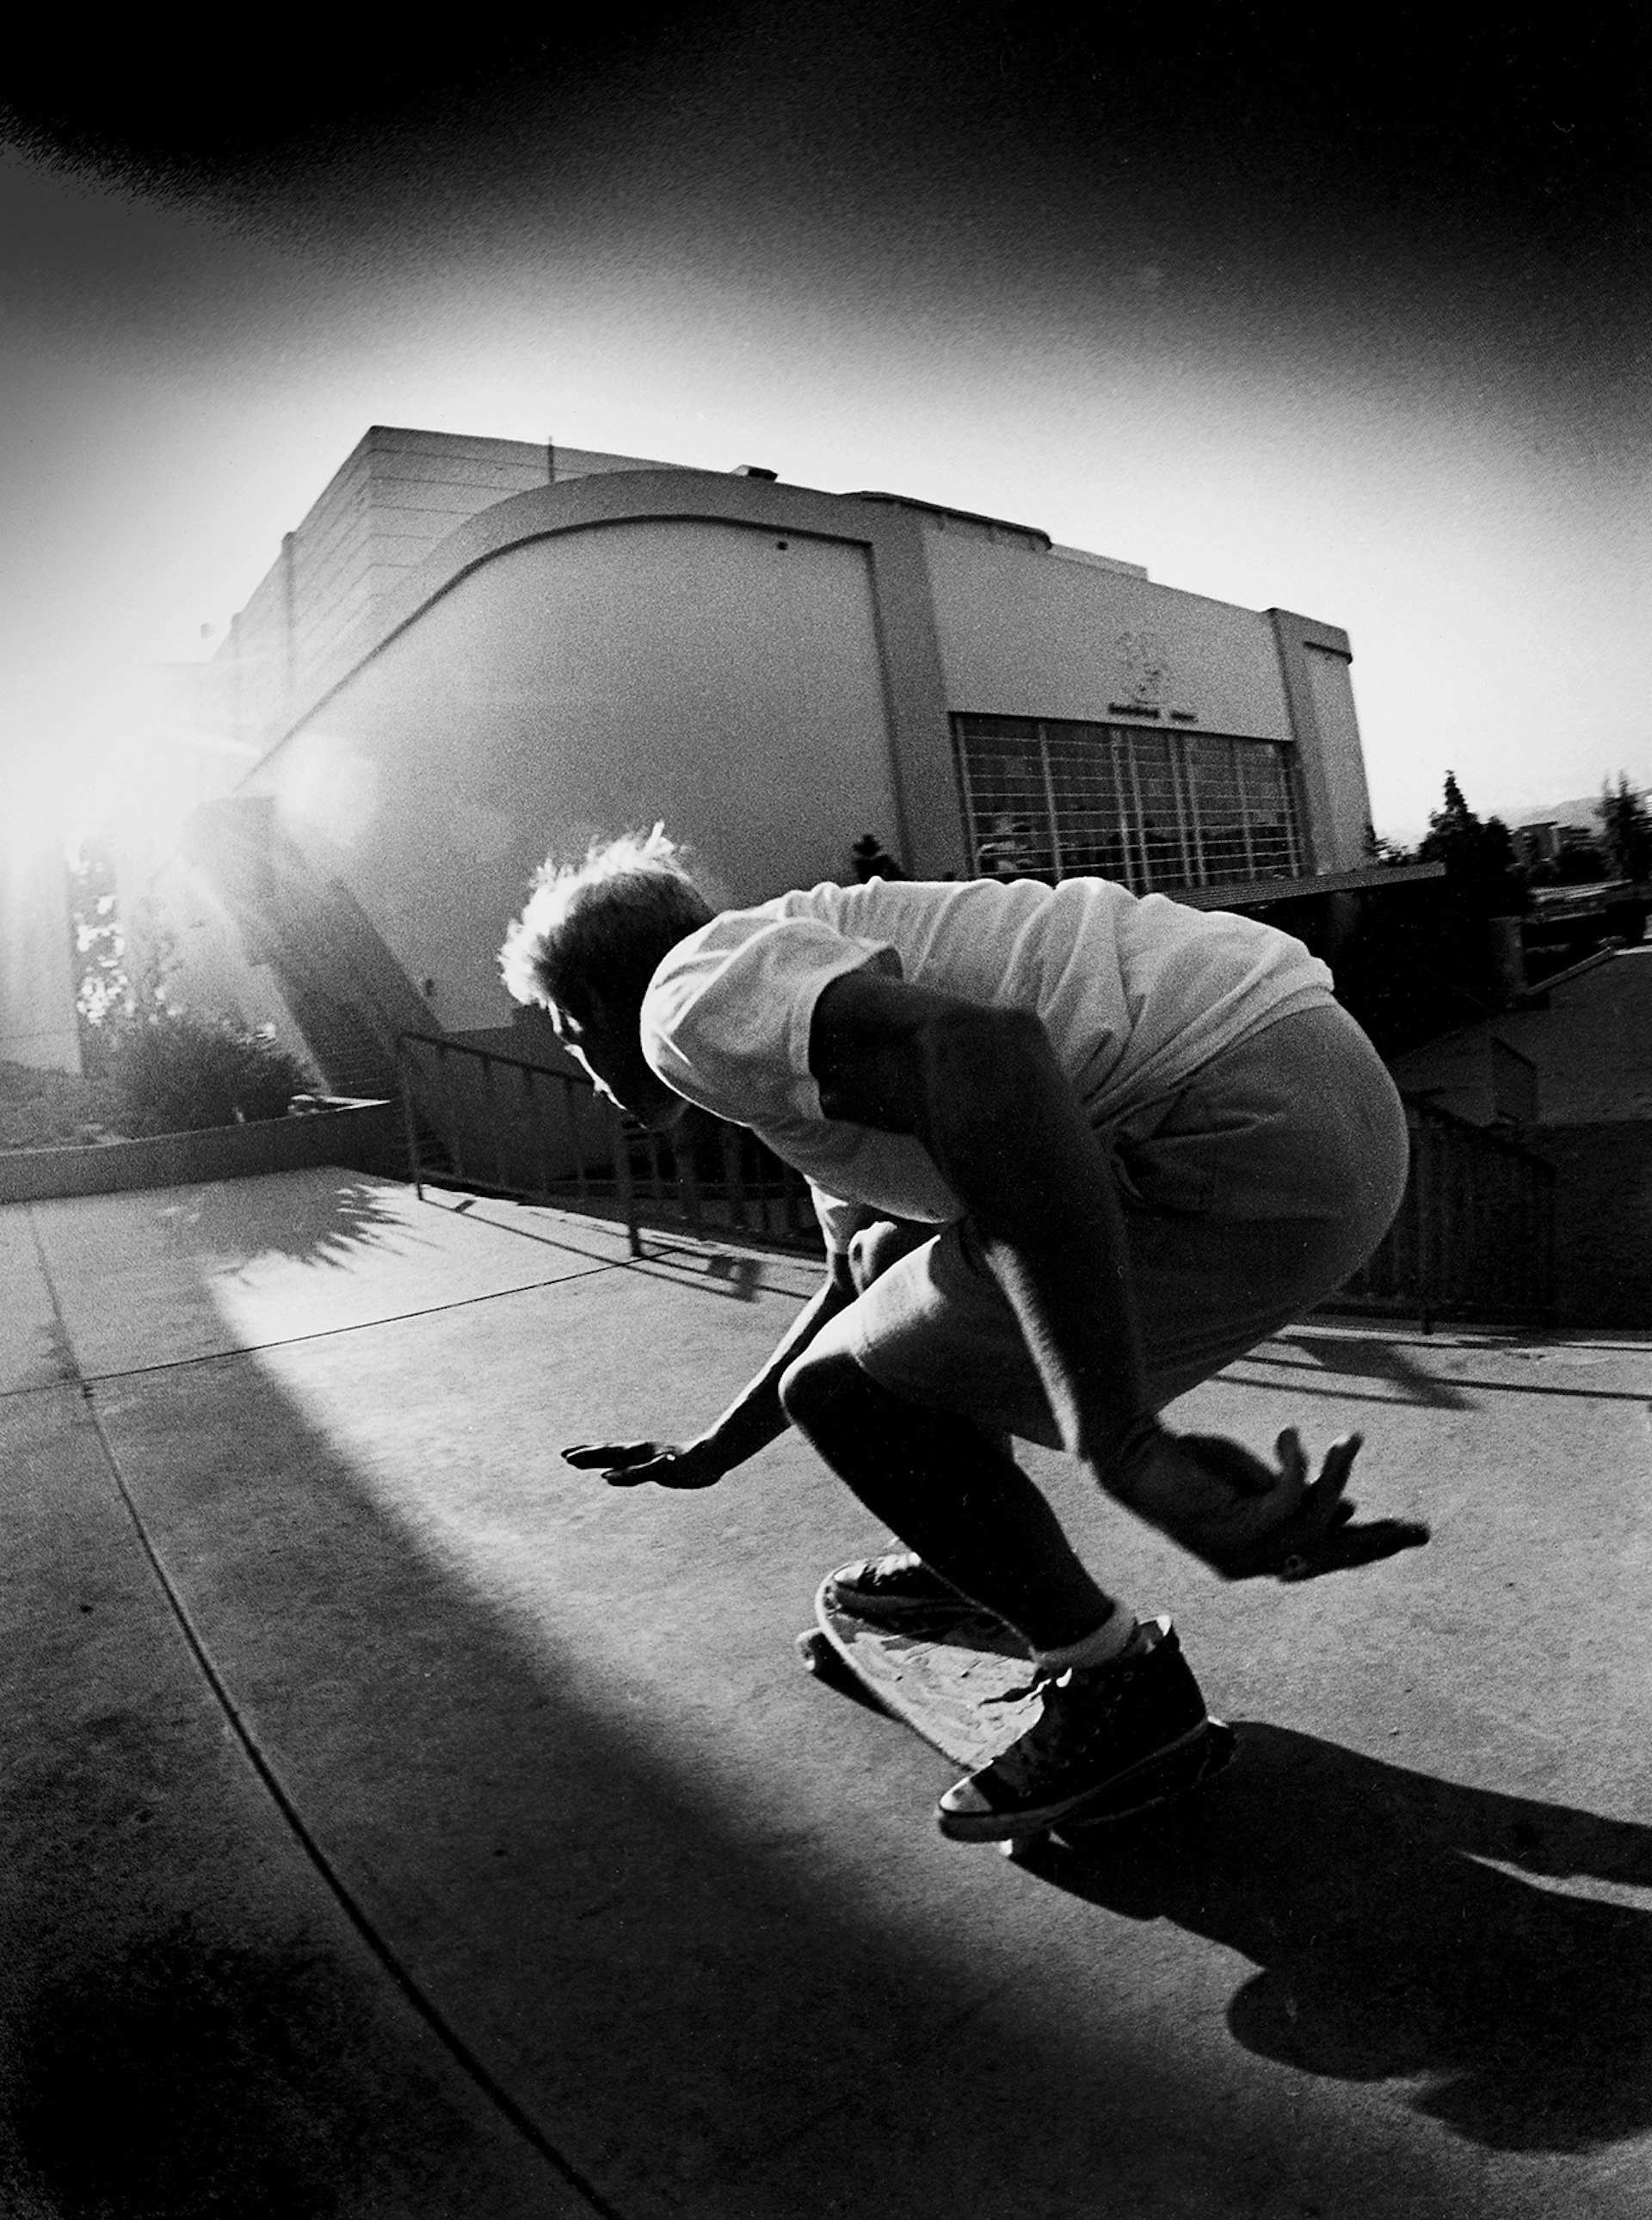 Revisiting the '80s Santa Monica scene with skateboarding legend Natas Kaupas